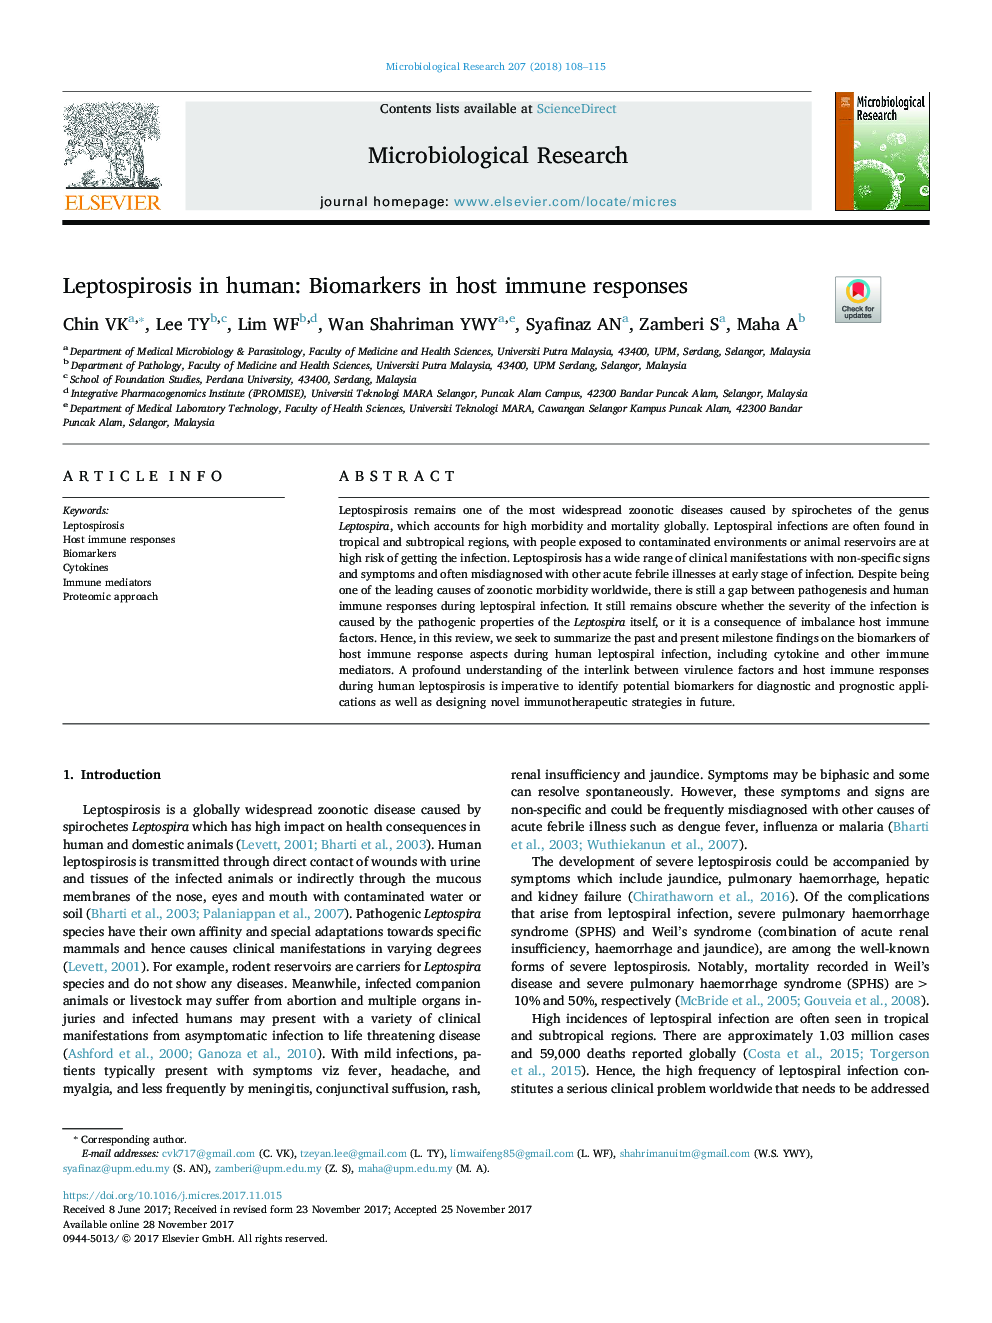 Leptospirosis in human: Biomarkers in host immune responses